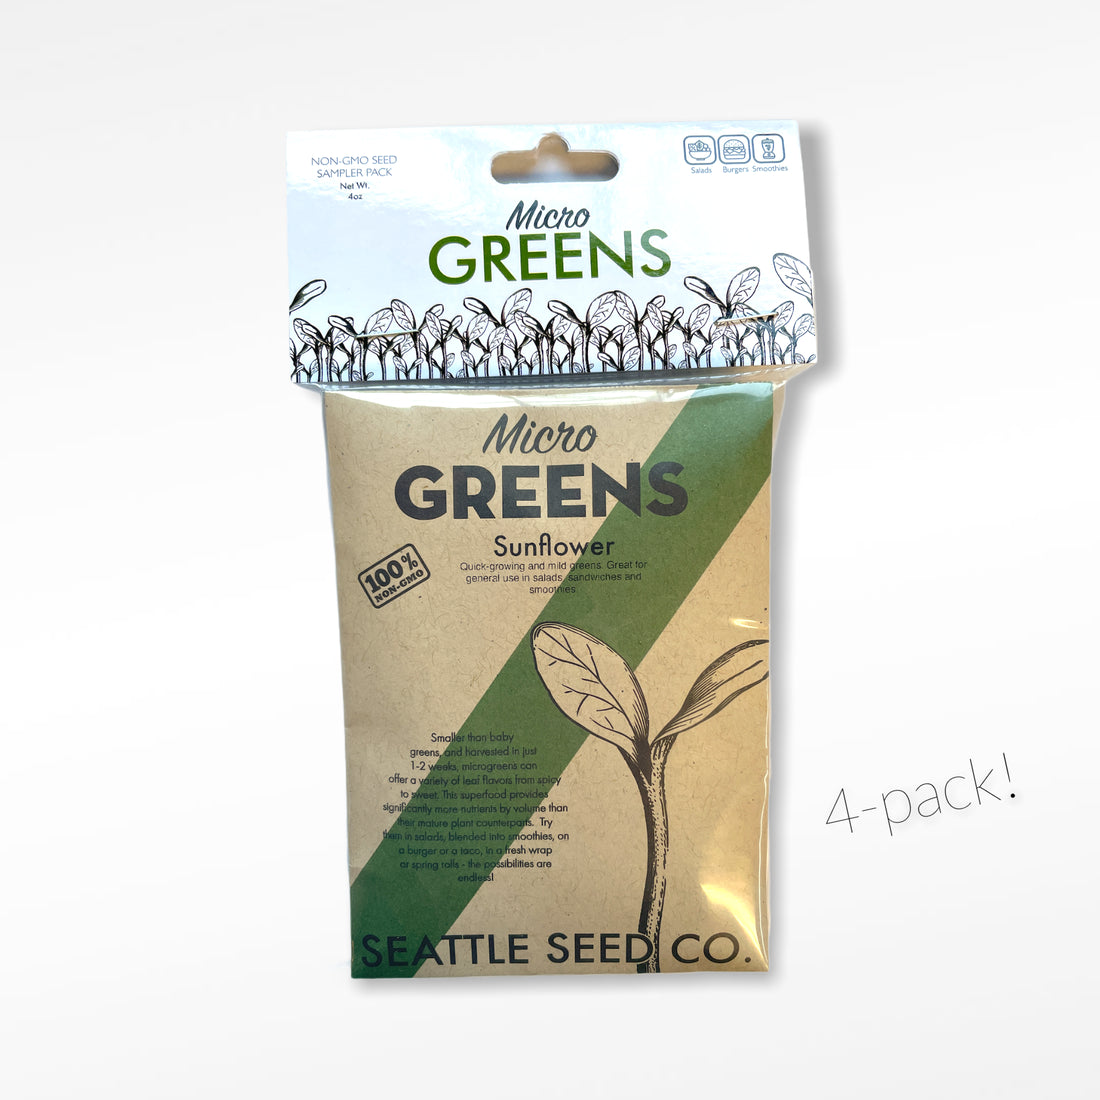 Non-GMO Microgreens Sampler Pack